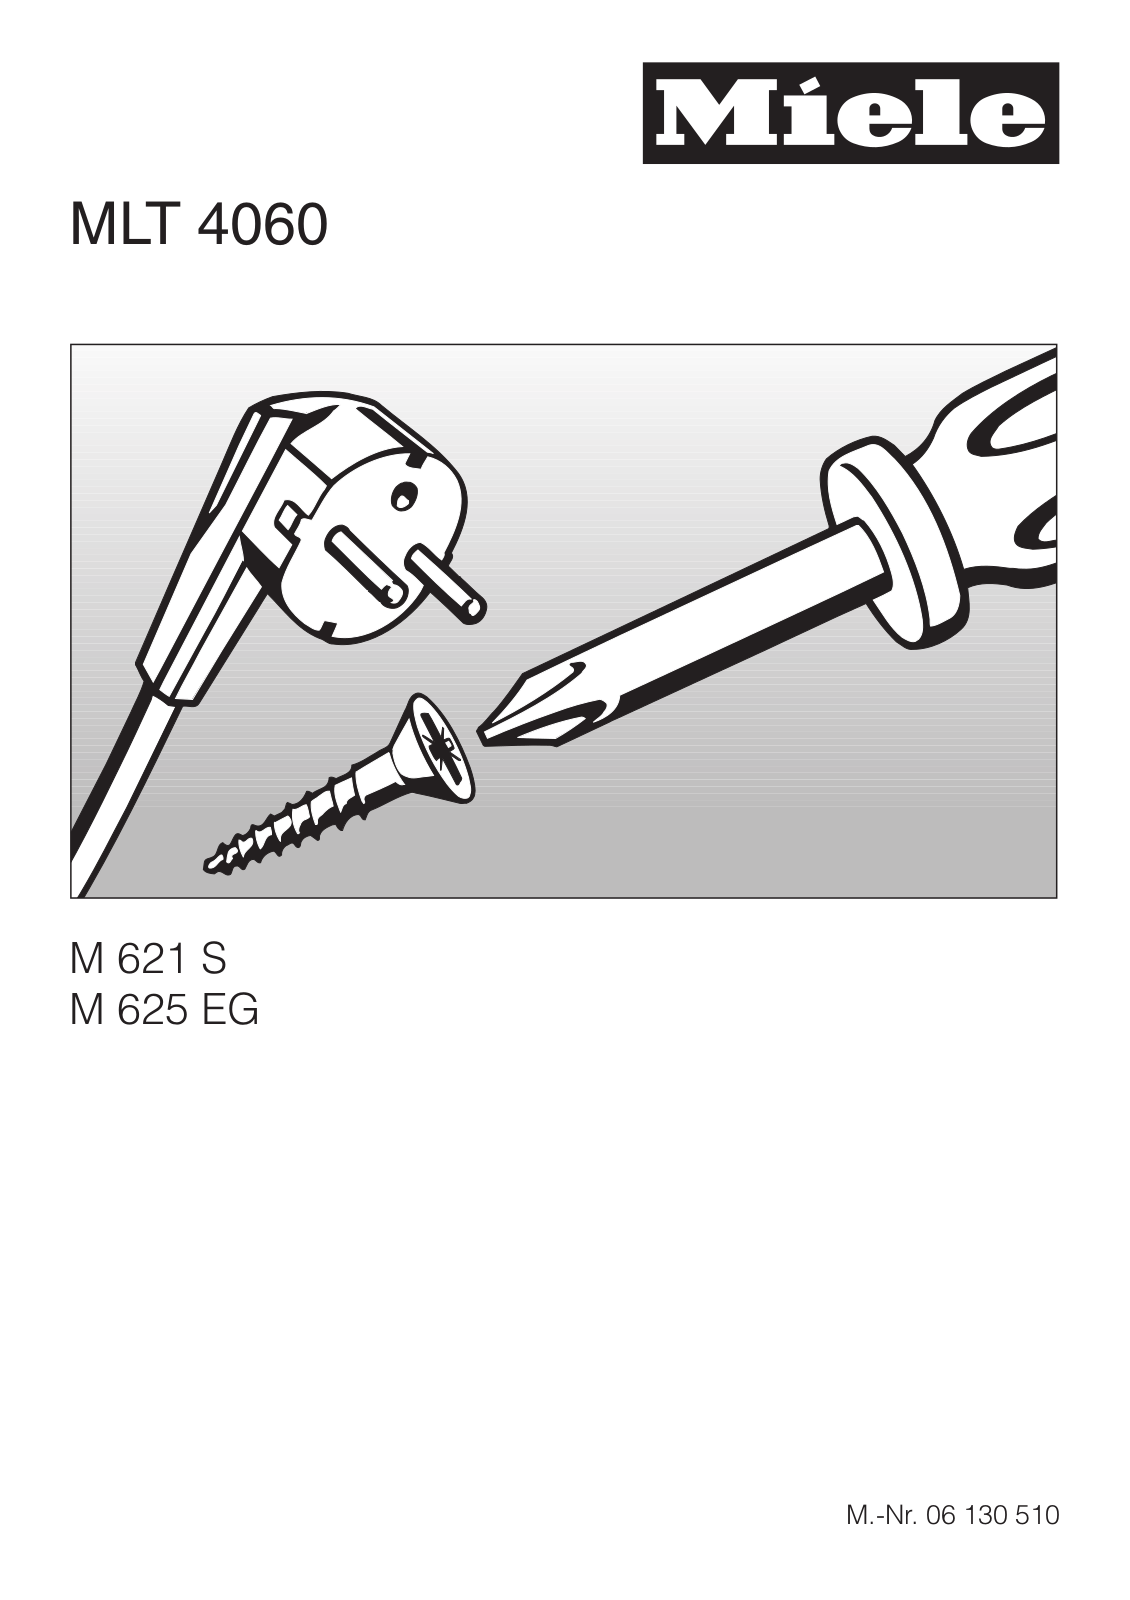 Miele MLT 4060 assembly instruction